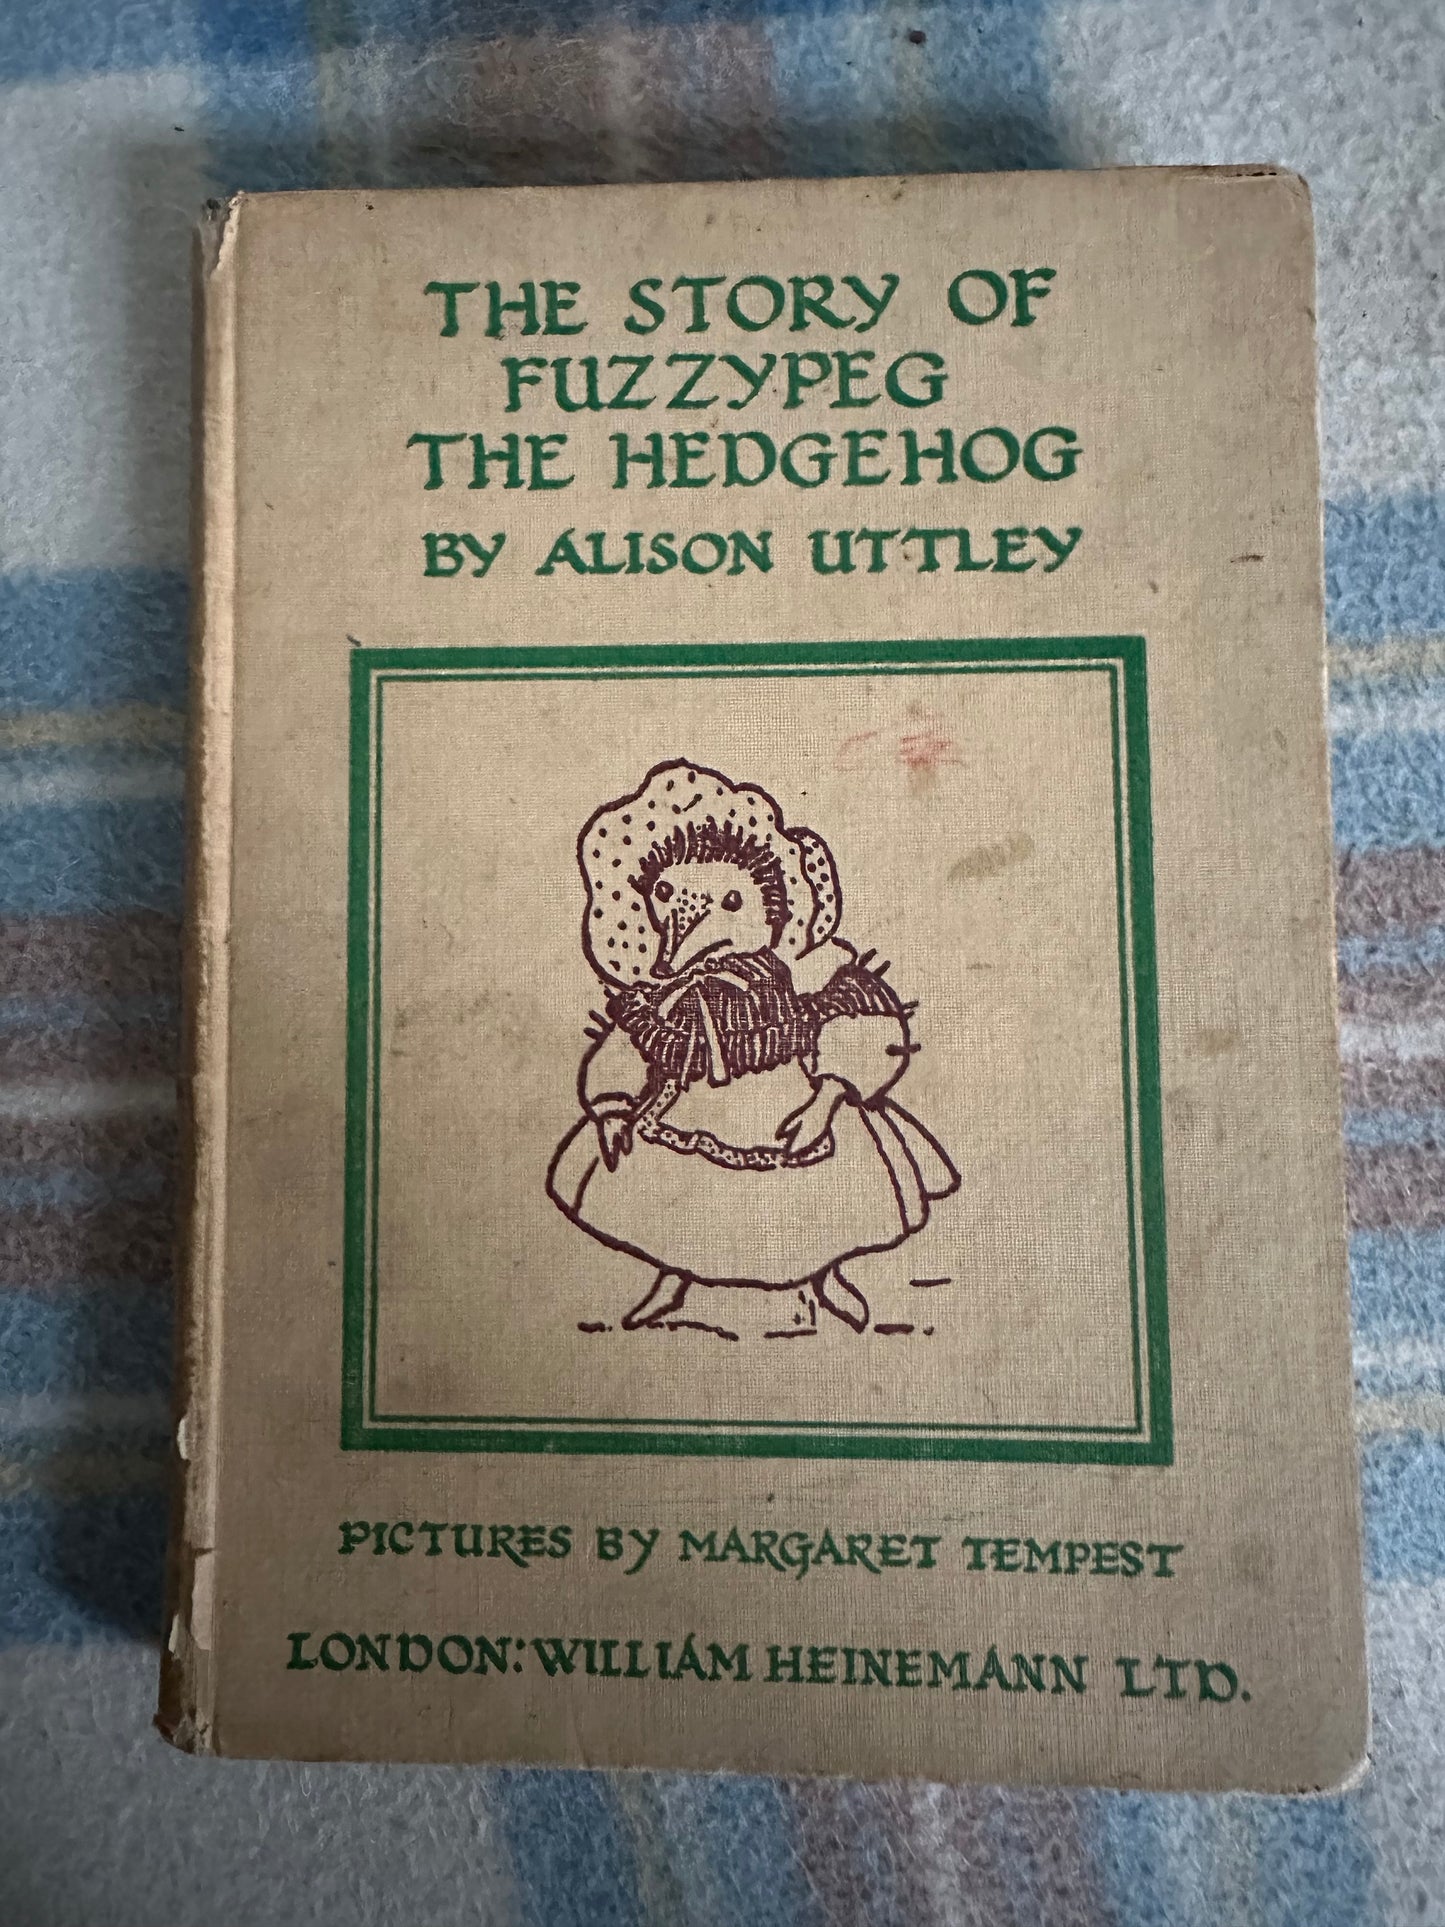 1949 The Story Of Fuzzypeg The Hedgehog - Alison Uttley(Margaret Tempest) William Heinemann